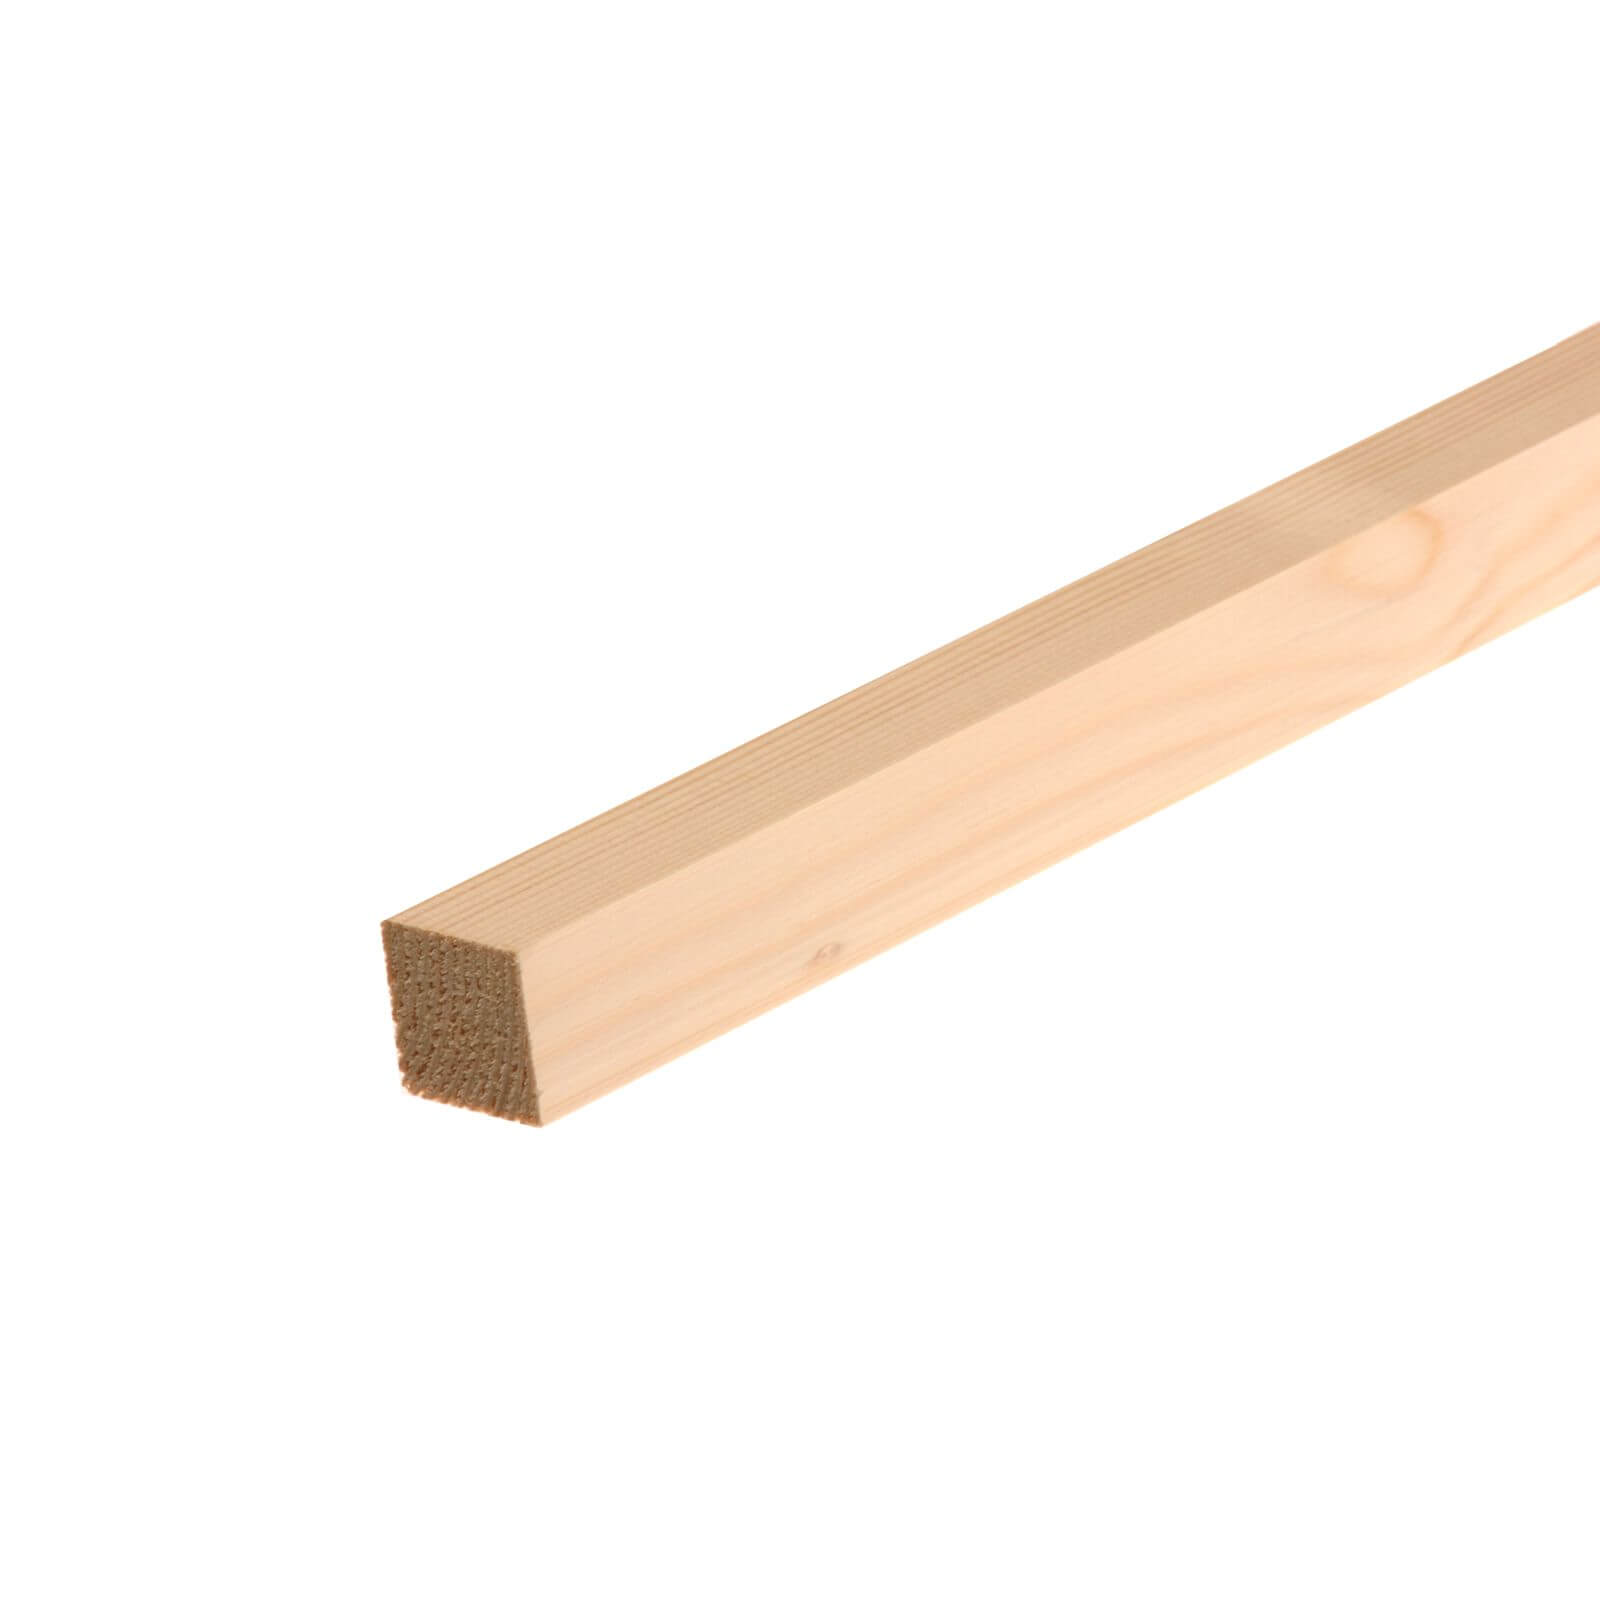 Metsa Planed Square Edge Stick Softwood Timber 2.4m (34 x 34 x 2400mm)